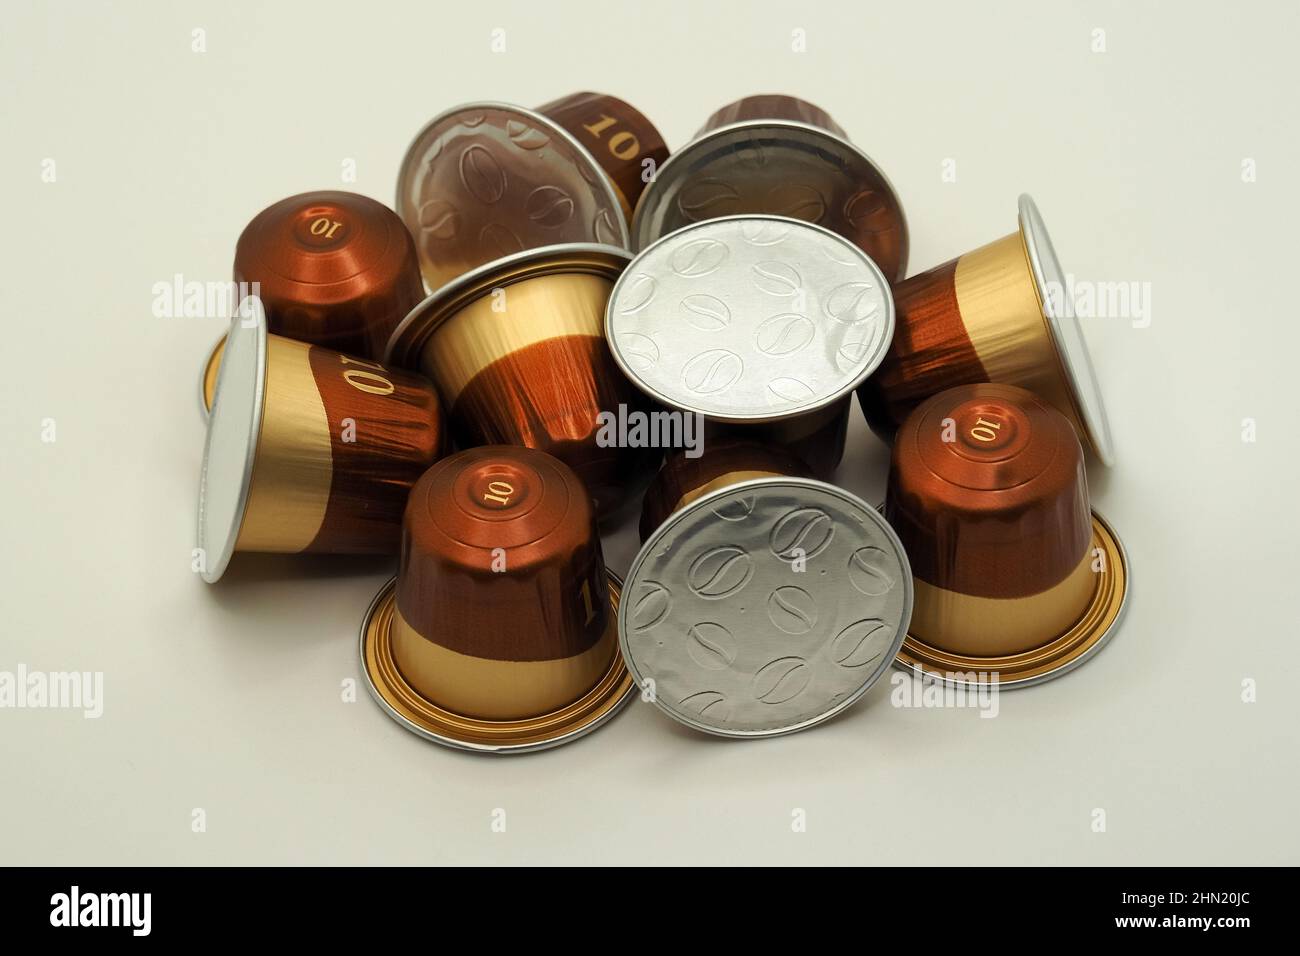 Douwe Egberts (is a Dutch brand) Omnia espresso coffee capsules Stock Photo  - Alamy